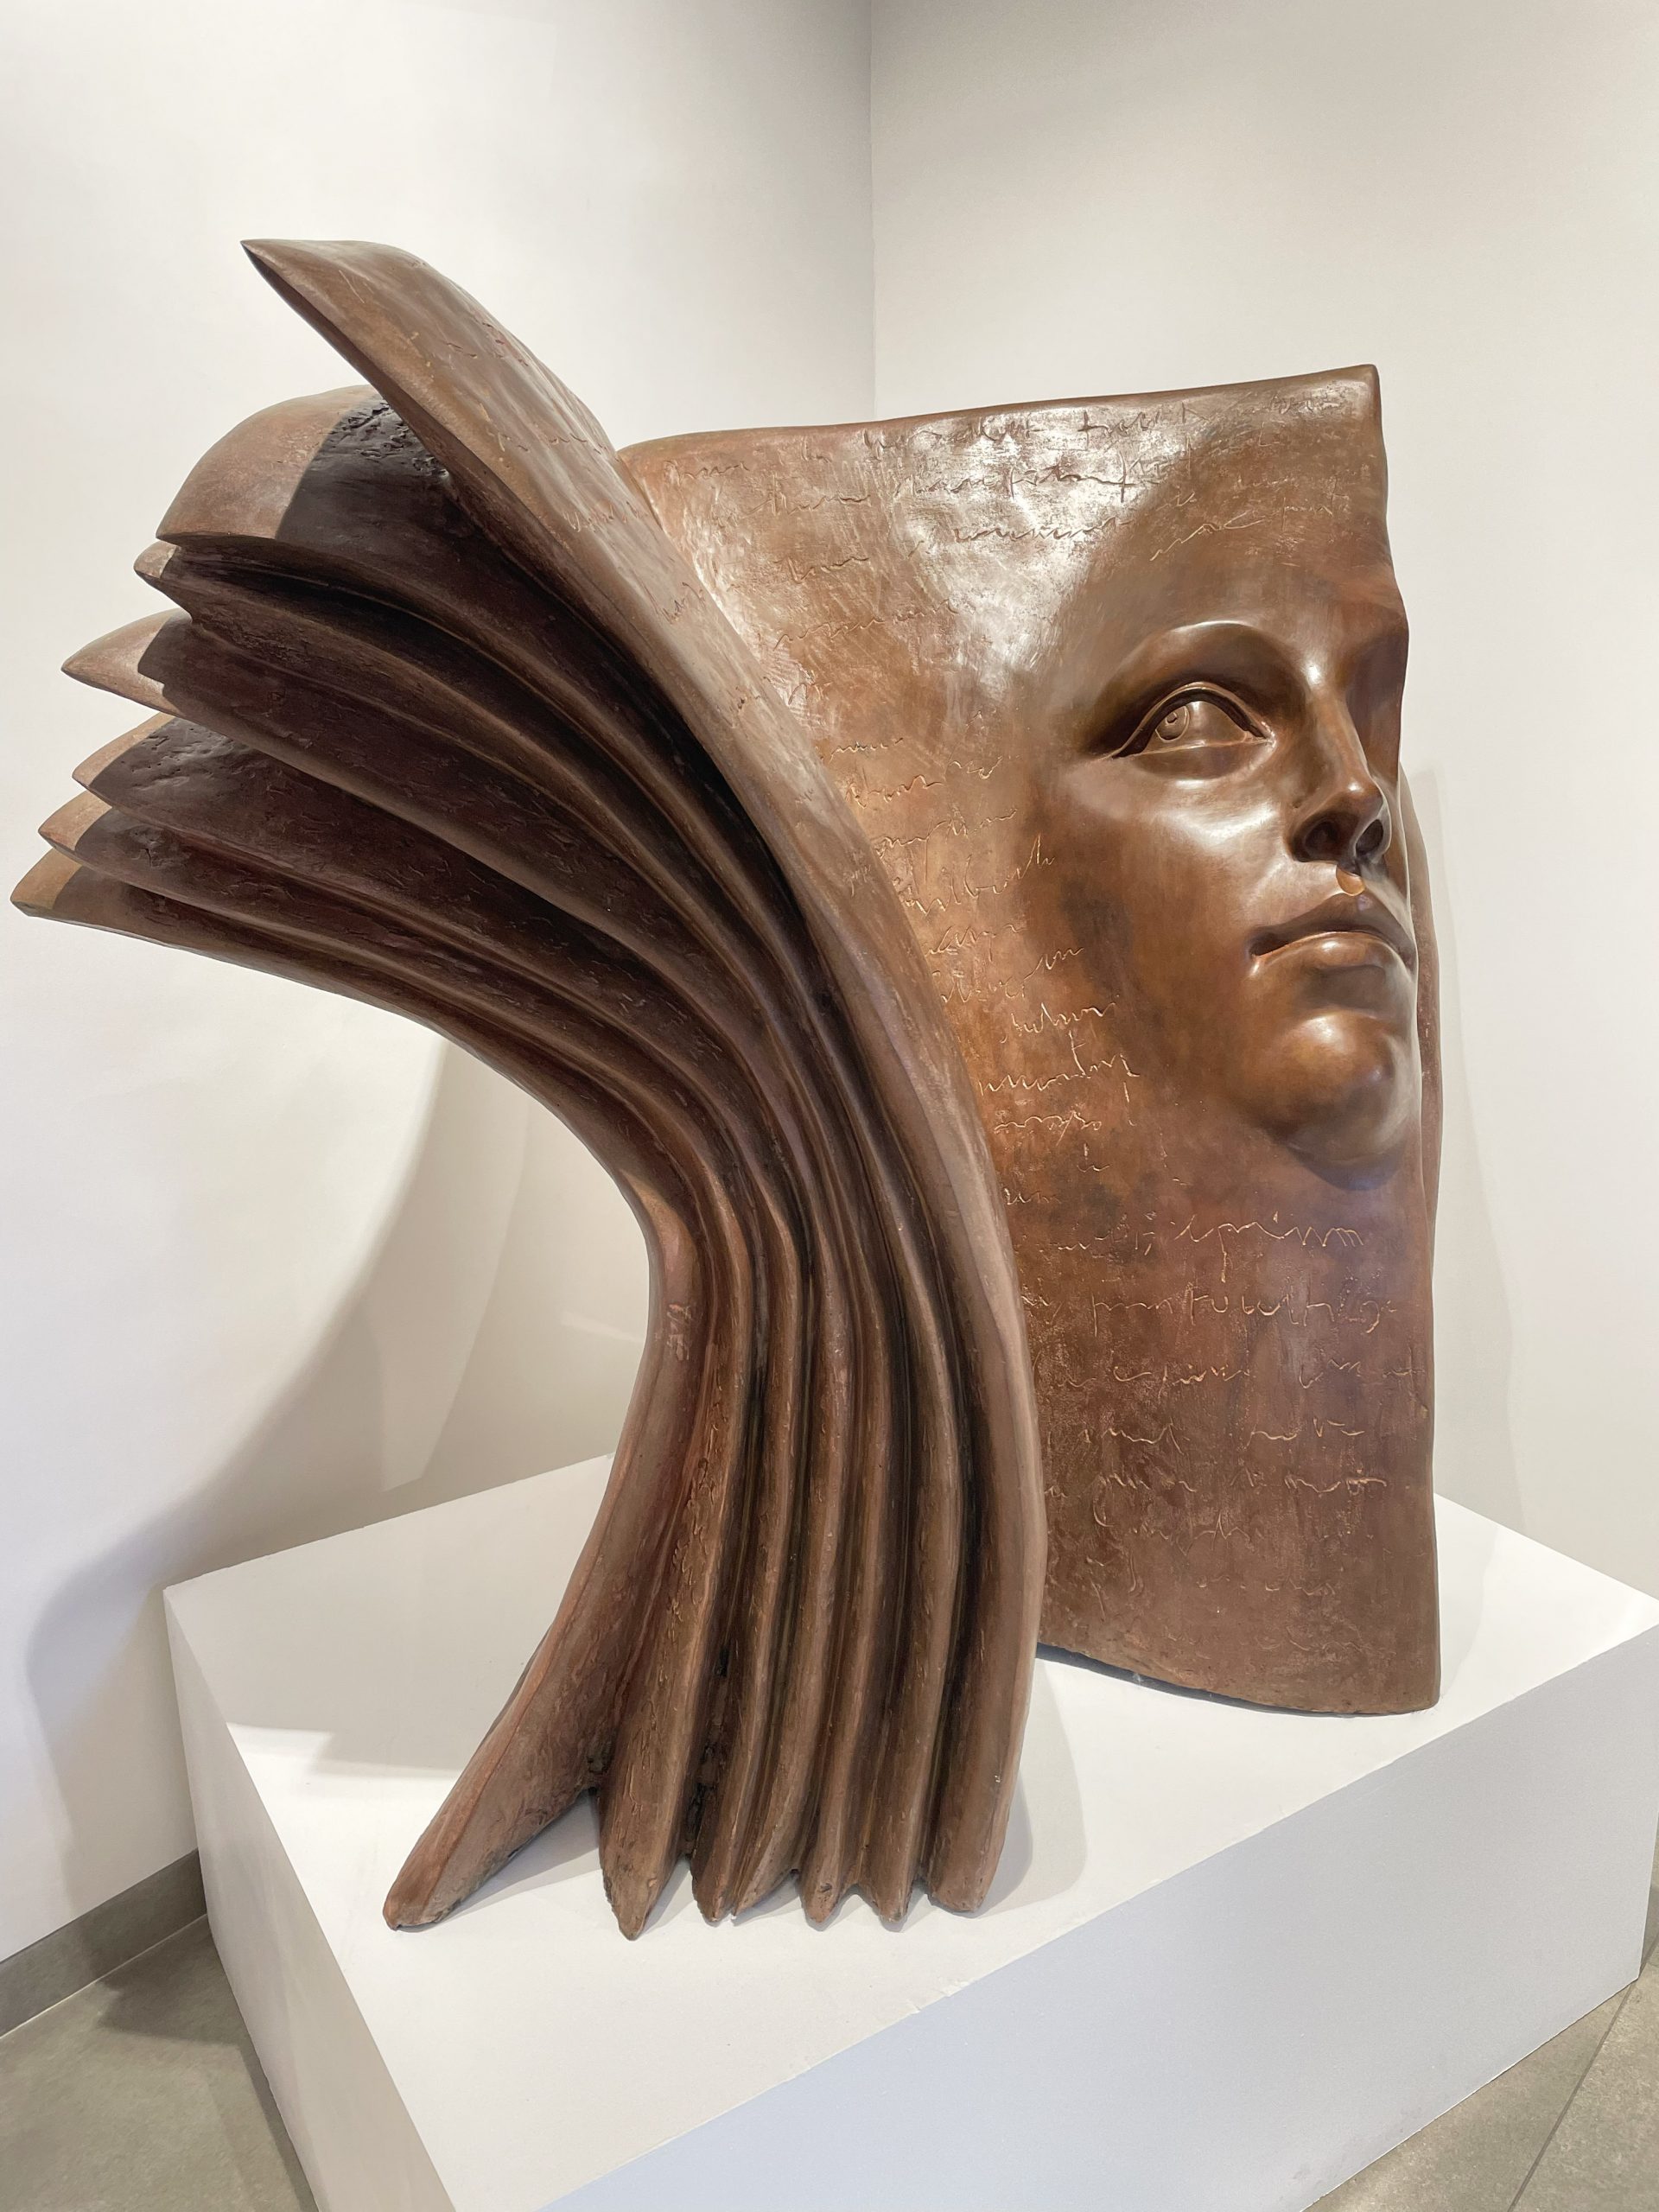 Paola Grizi artiste<br />
Sculpture vers l'avenir<br />
Bronze<br />
© Marciano Contemporary